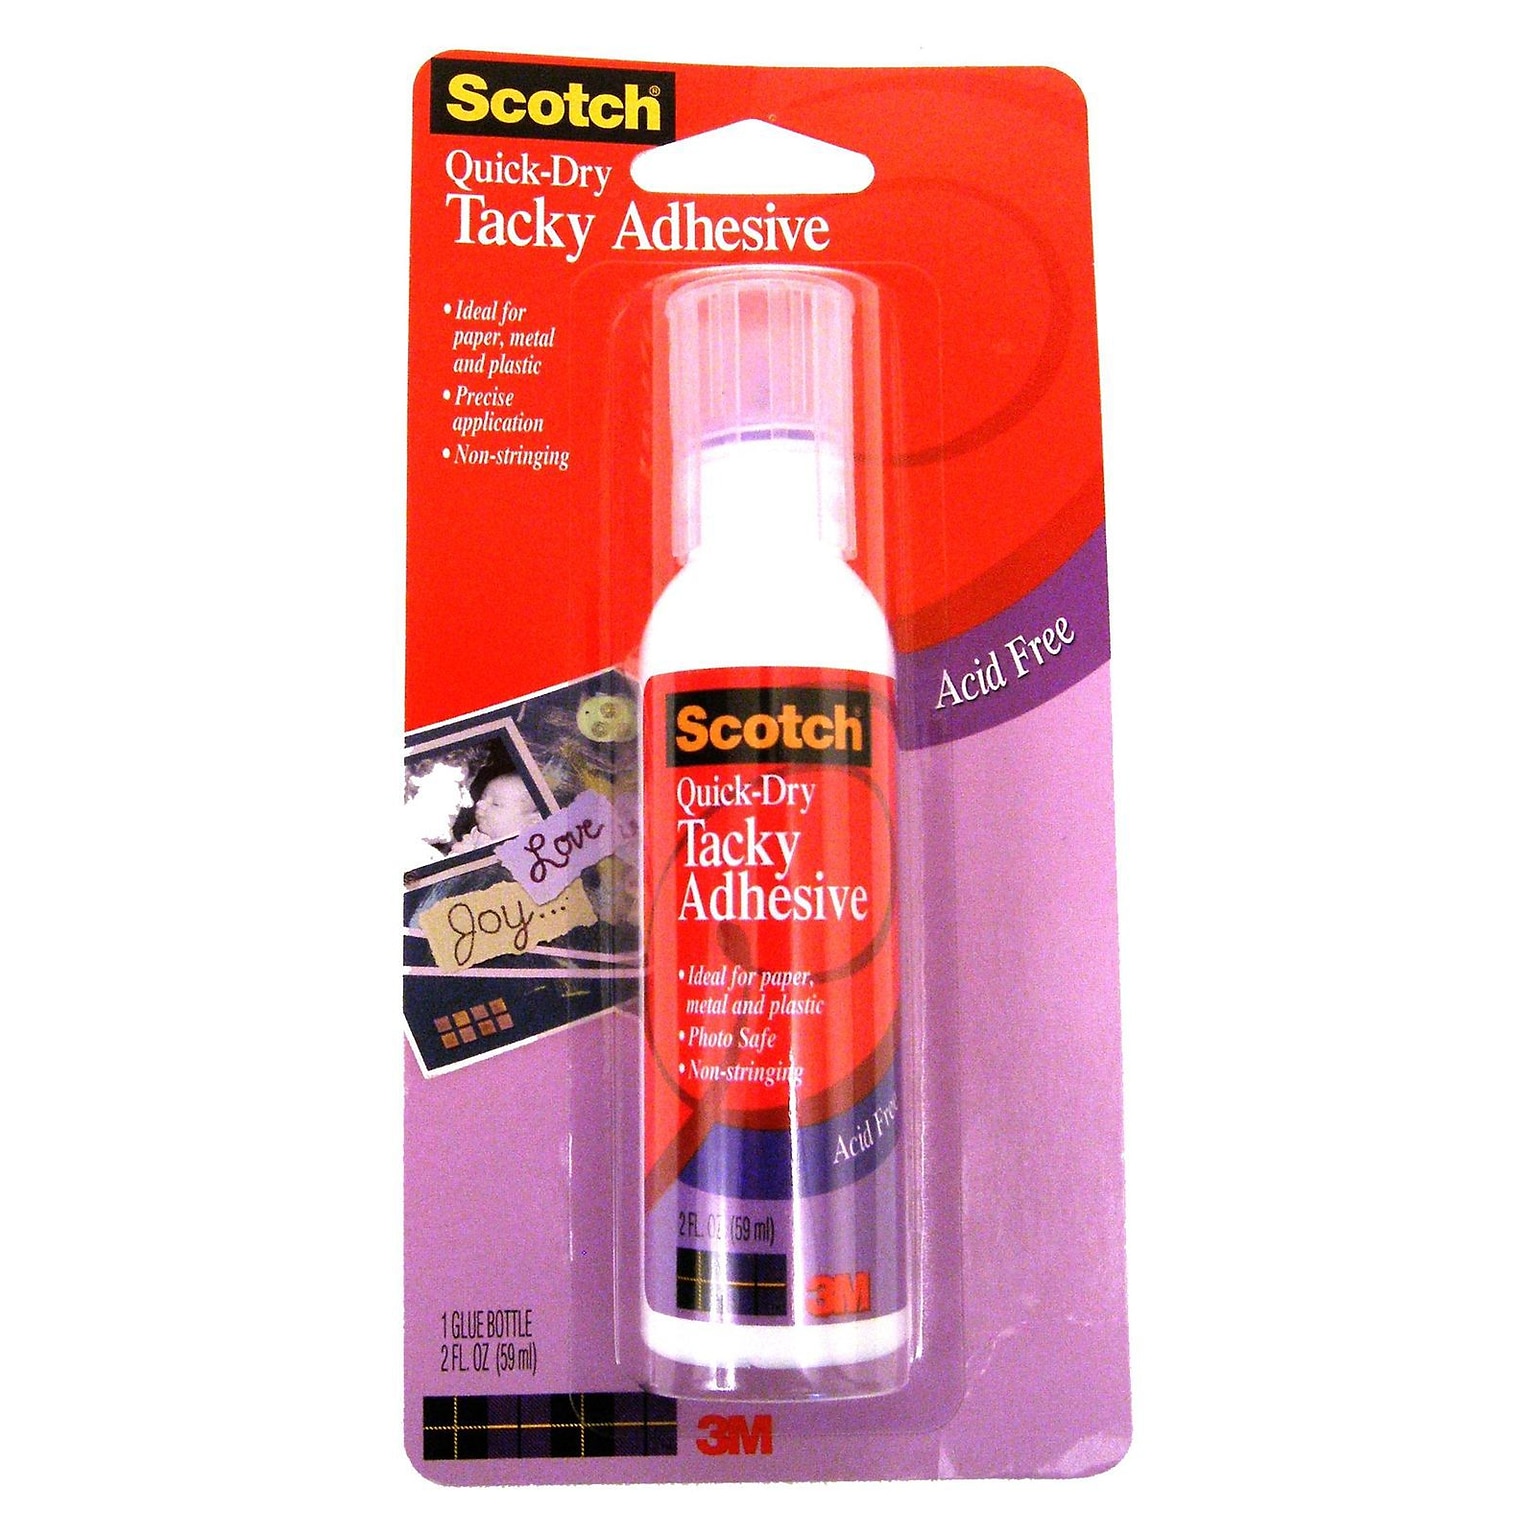 3M Scotch Quick-Dry Tacky Adhesive 2 Fl. Oz. [Pack Of 6] (6PK-020)